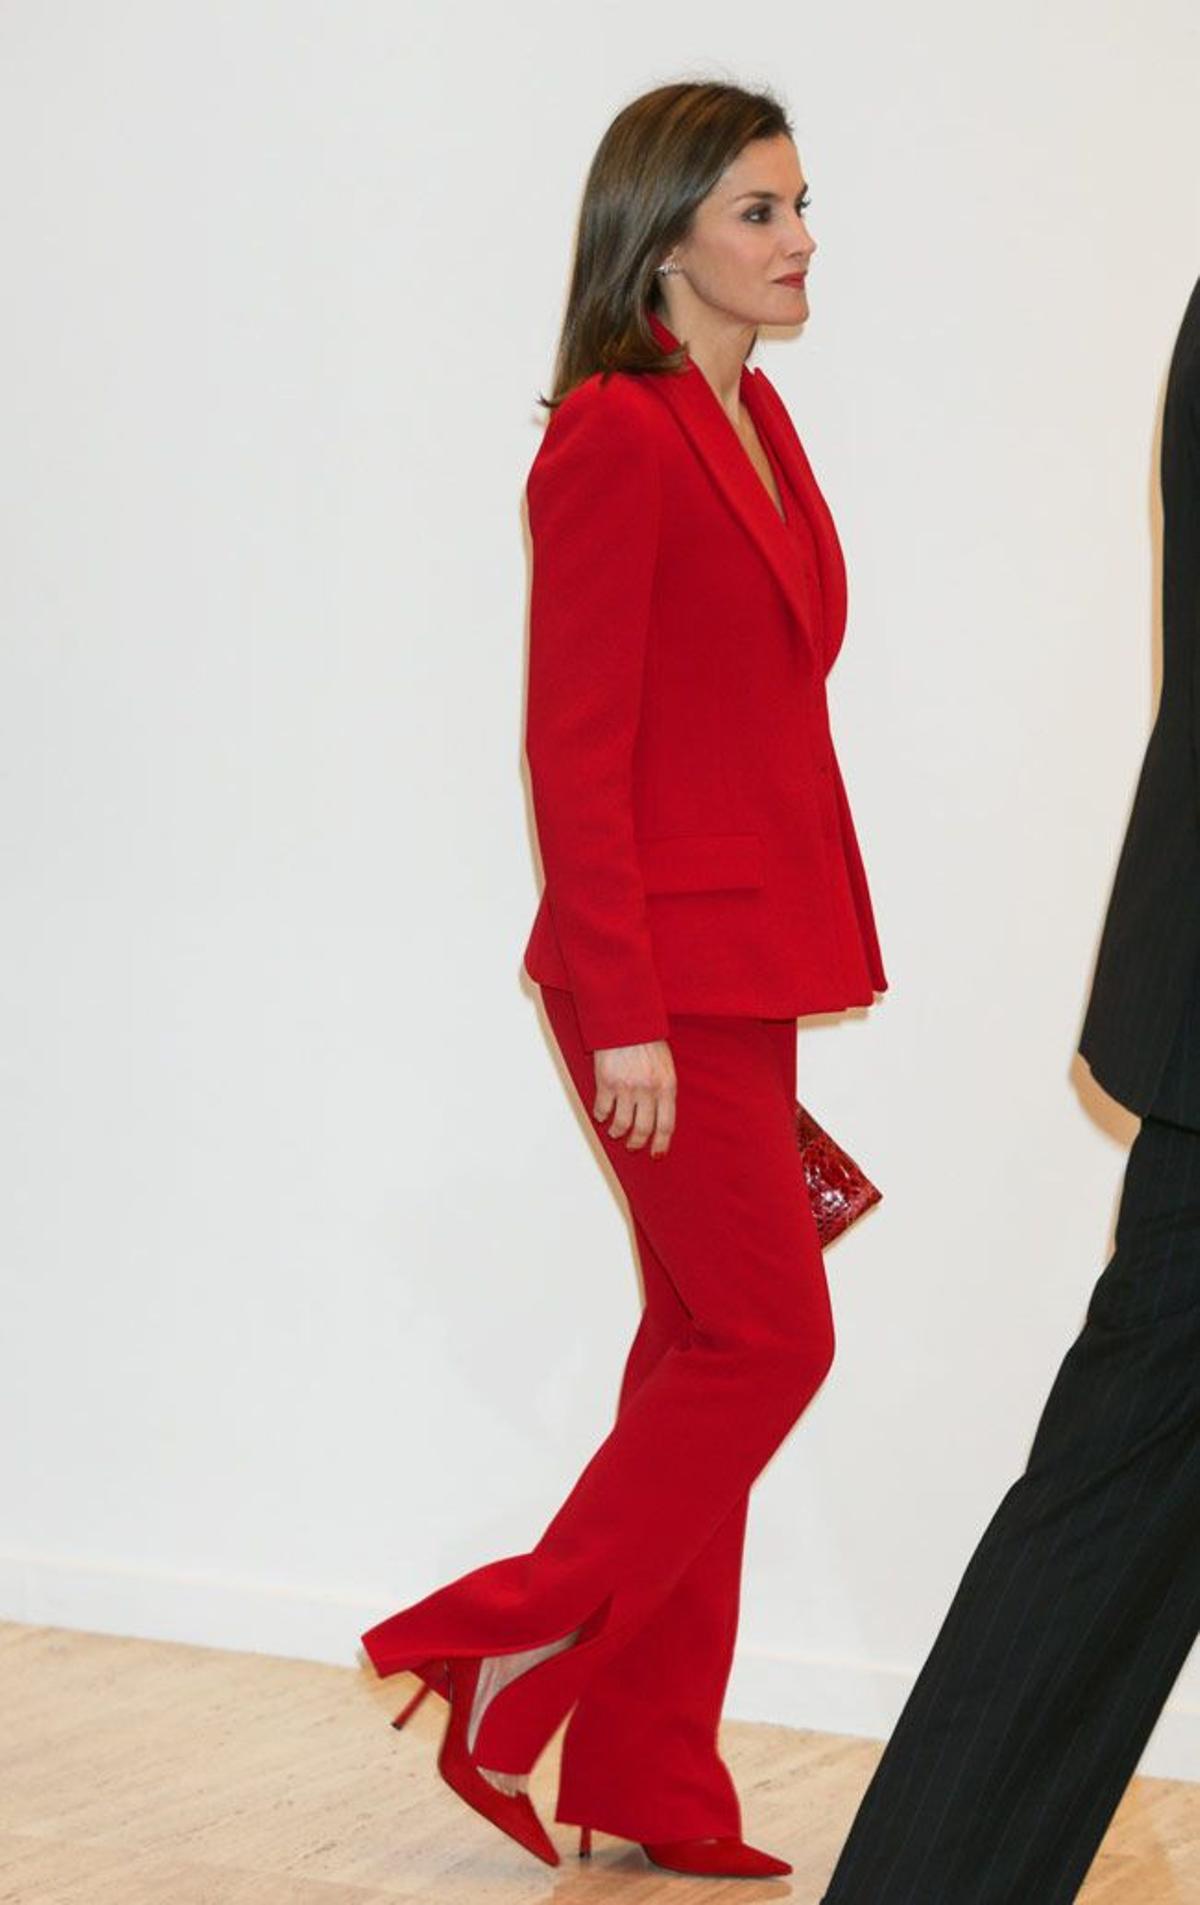 Letizia Ortiz sorprende con un pantalón rojo con aberturas leterales